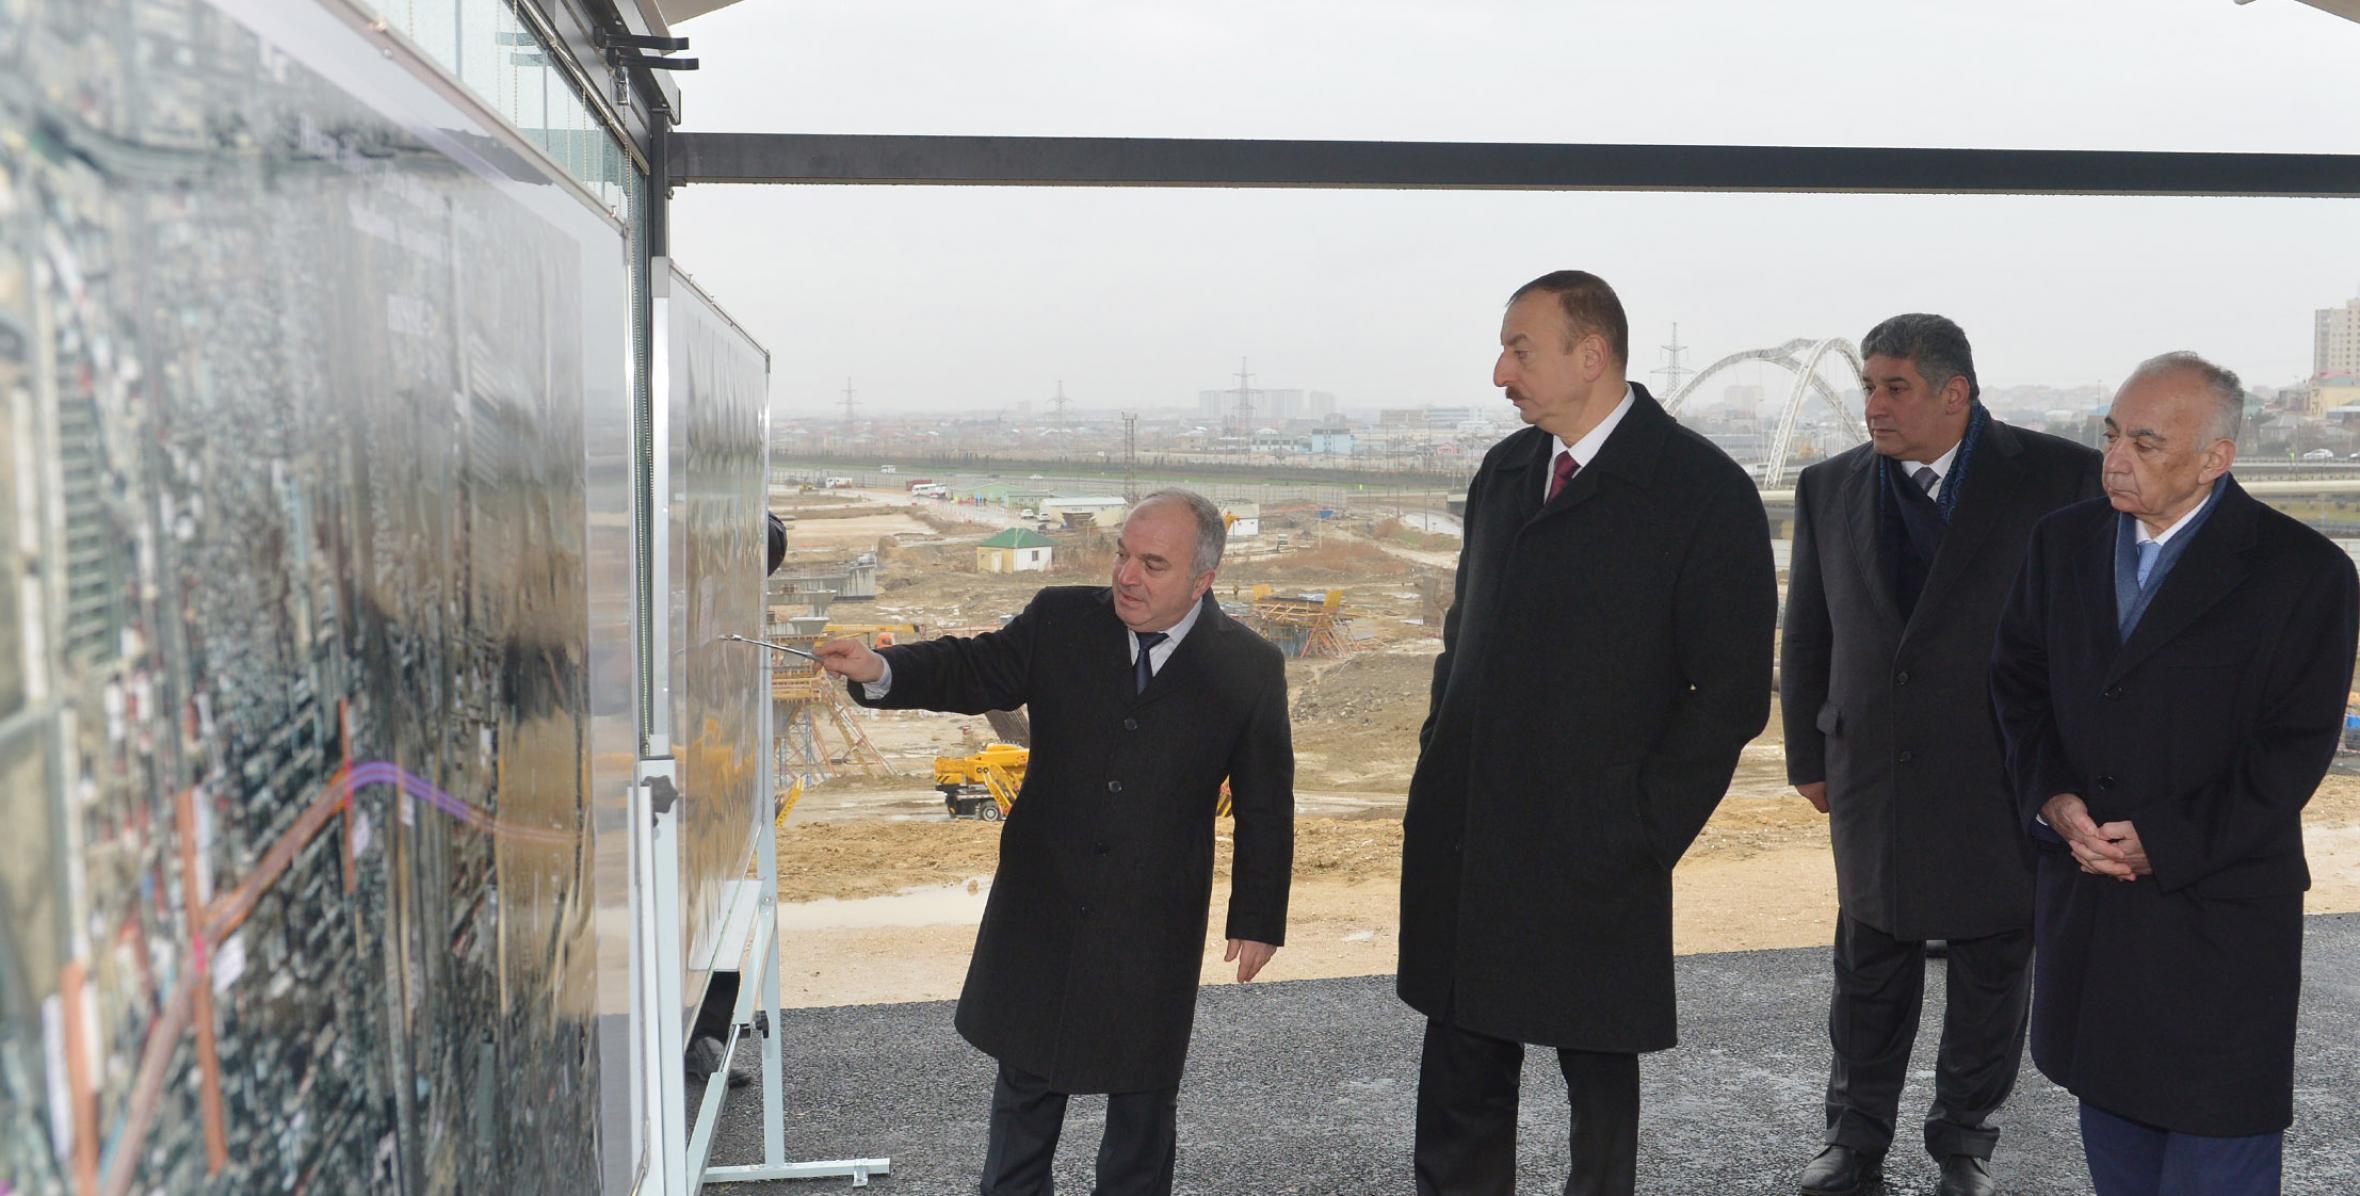 Ilham Aliyev inspected in Baku the construction work under way on the Hasan Aliyev Street - Ziya Buniyatov Avenue - Olympic Stadium Highway